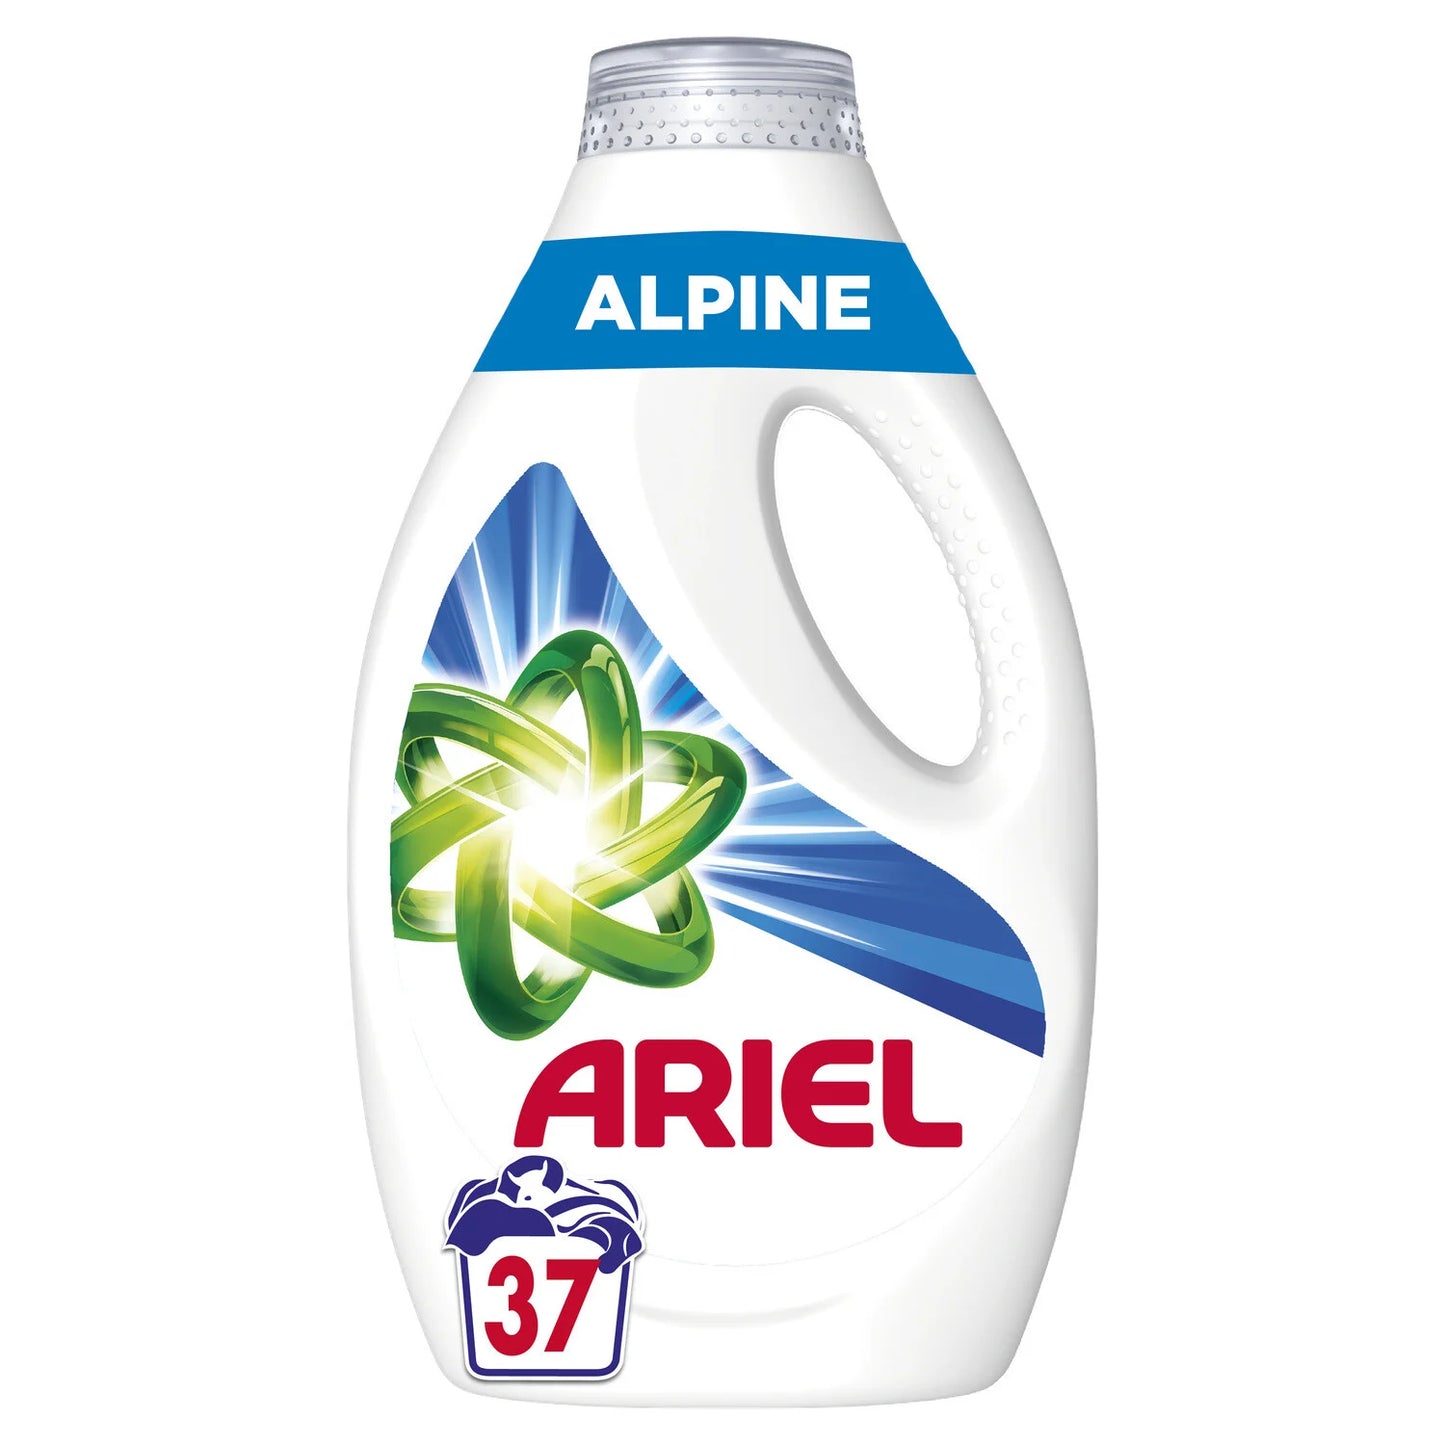 ARIEL Lessive Liquide Alpine 1 L